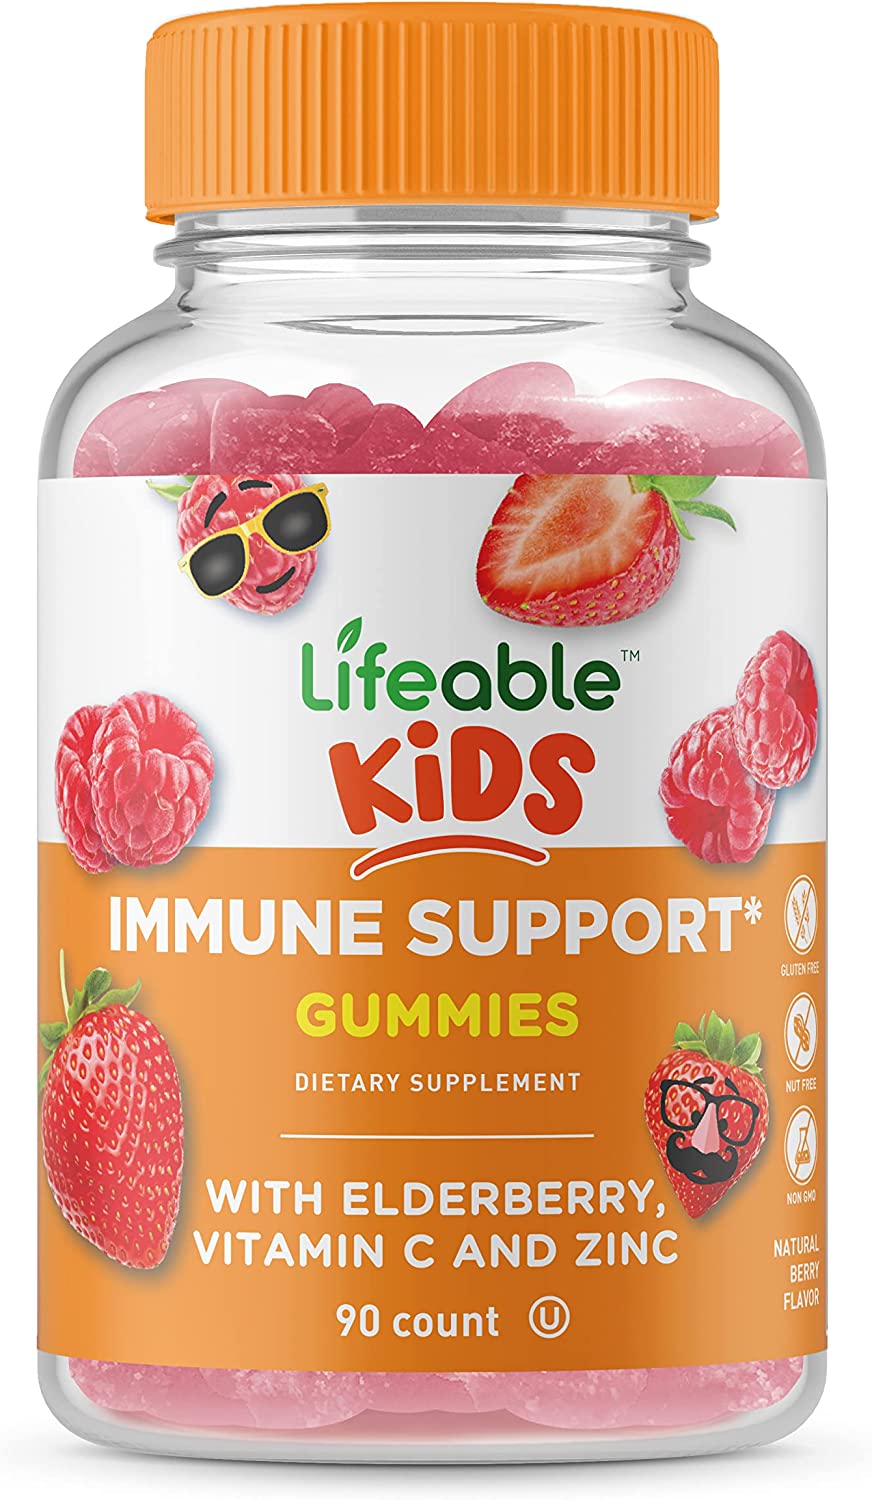 Lifeable Immune Support Gummies for Kids – with Elderberry, Vitamin C and Zinc – Great Tasting Natural Flavor Gummy Supplement – Gluten Free Vegetarian GMO-Free Chewable Vitamins – 90 Gummies